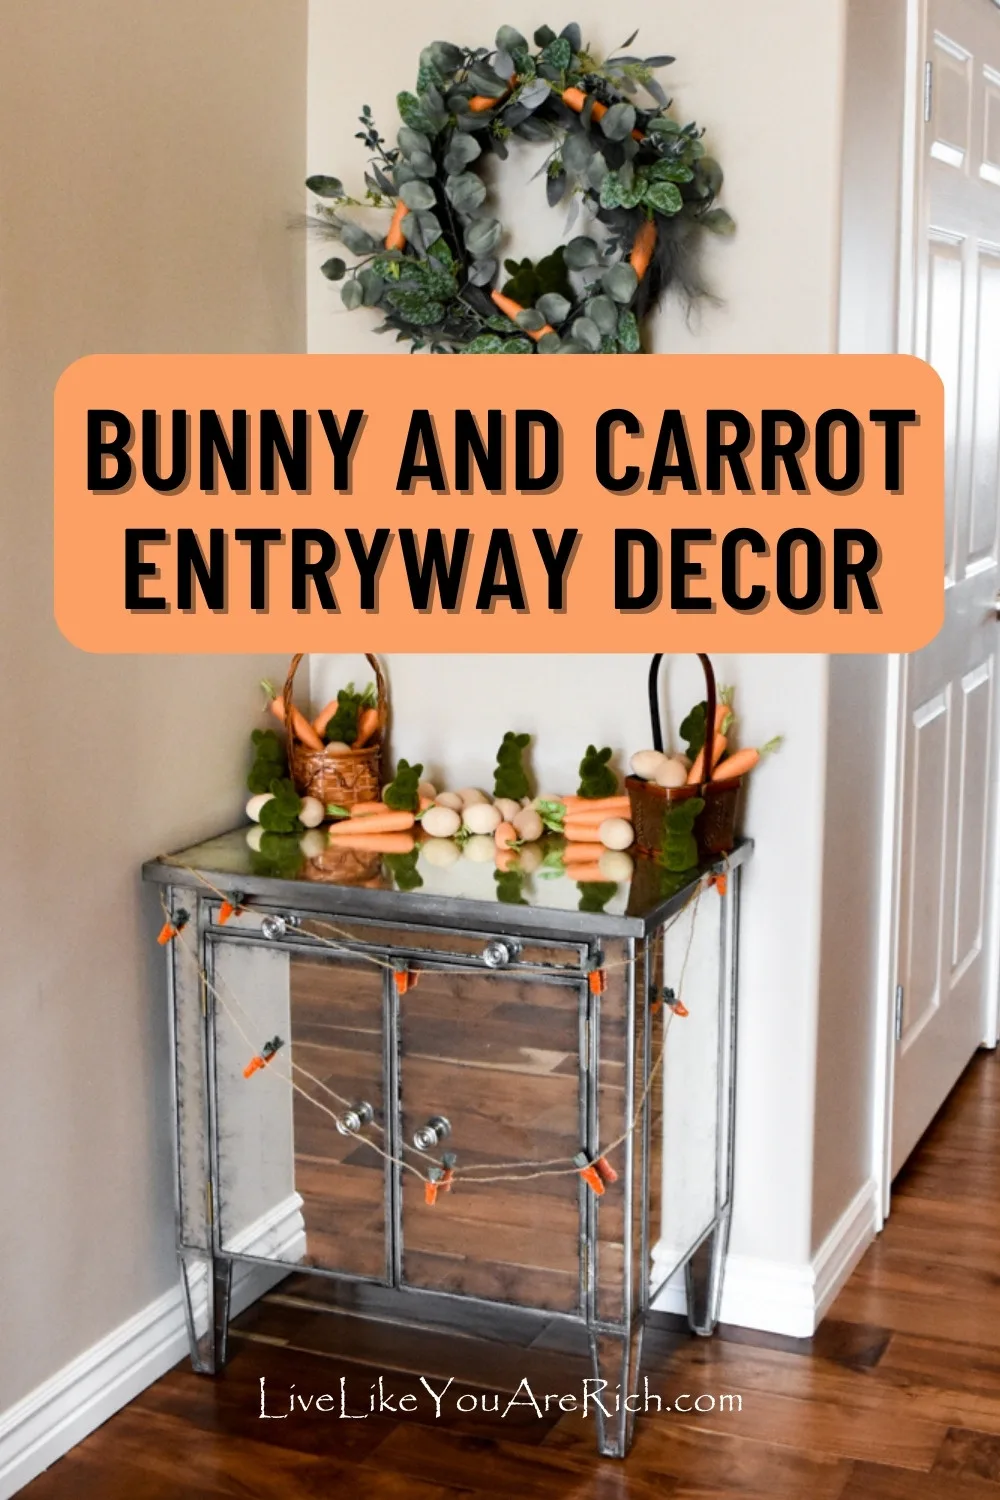 Bunny and Carrot Entryway Decor